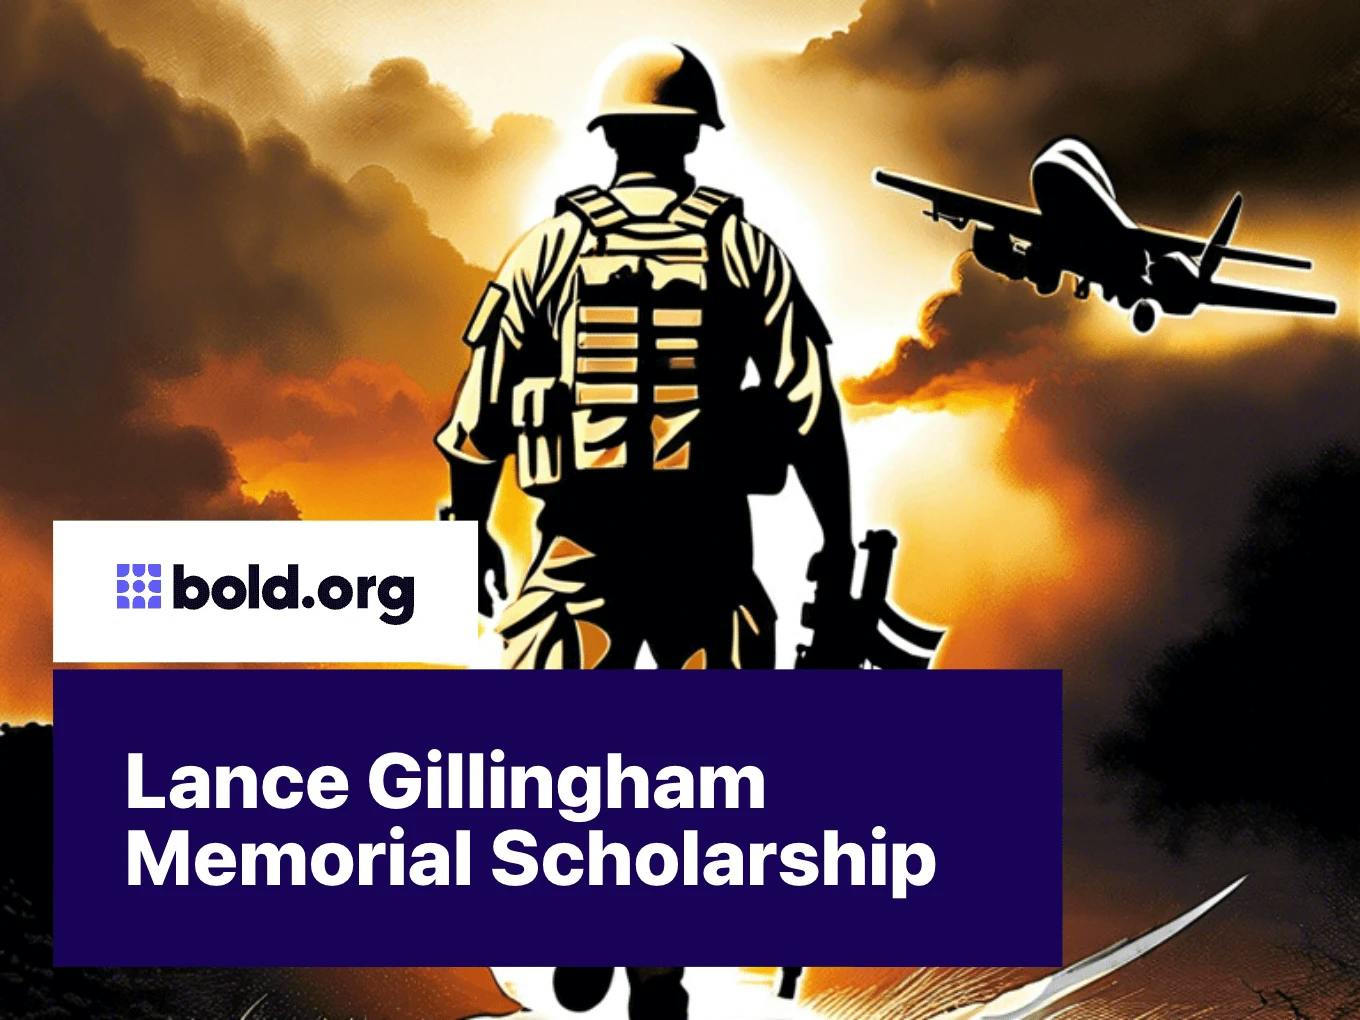 Lance Gillingham Memorial Scholarship